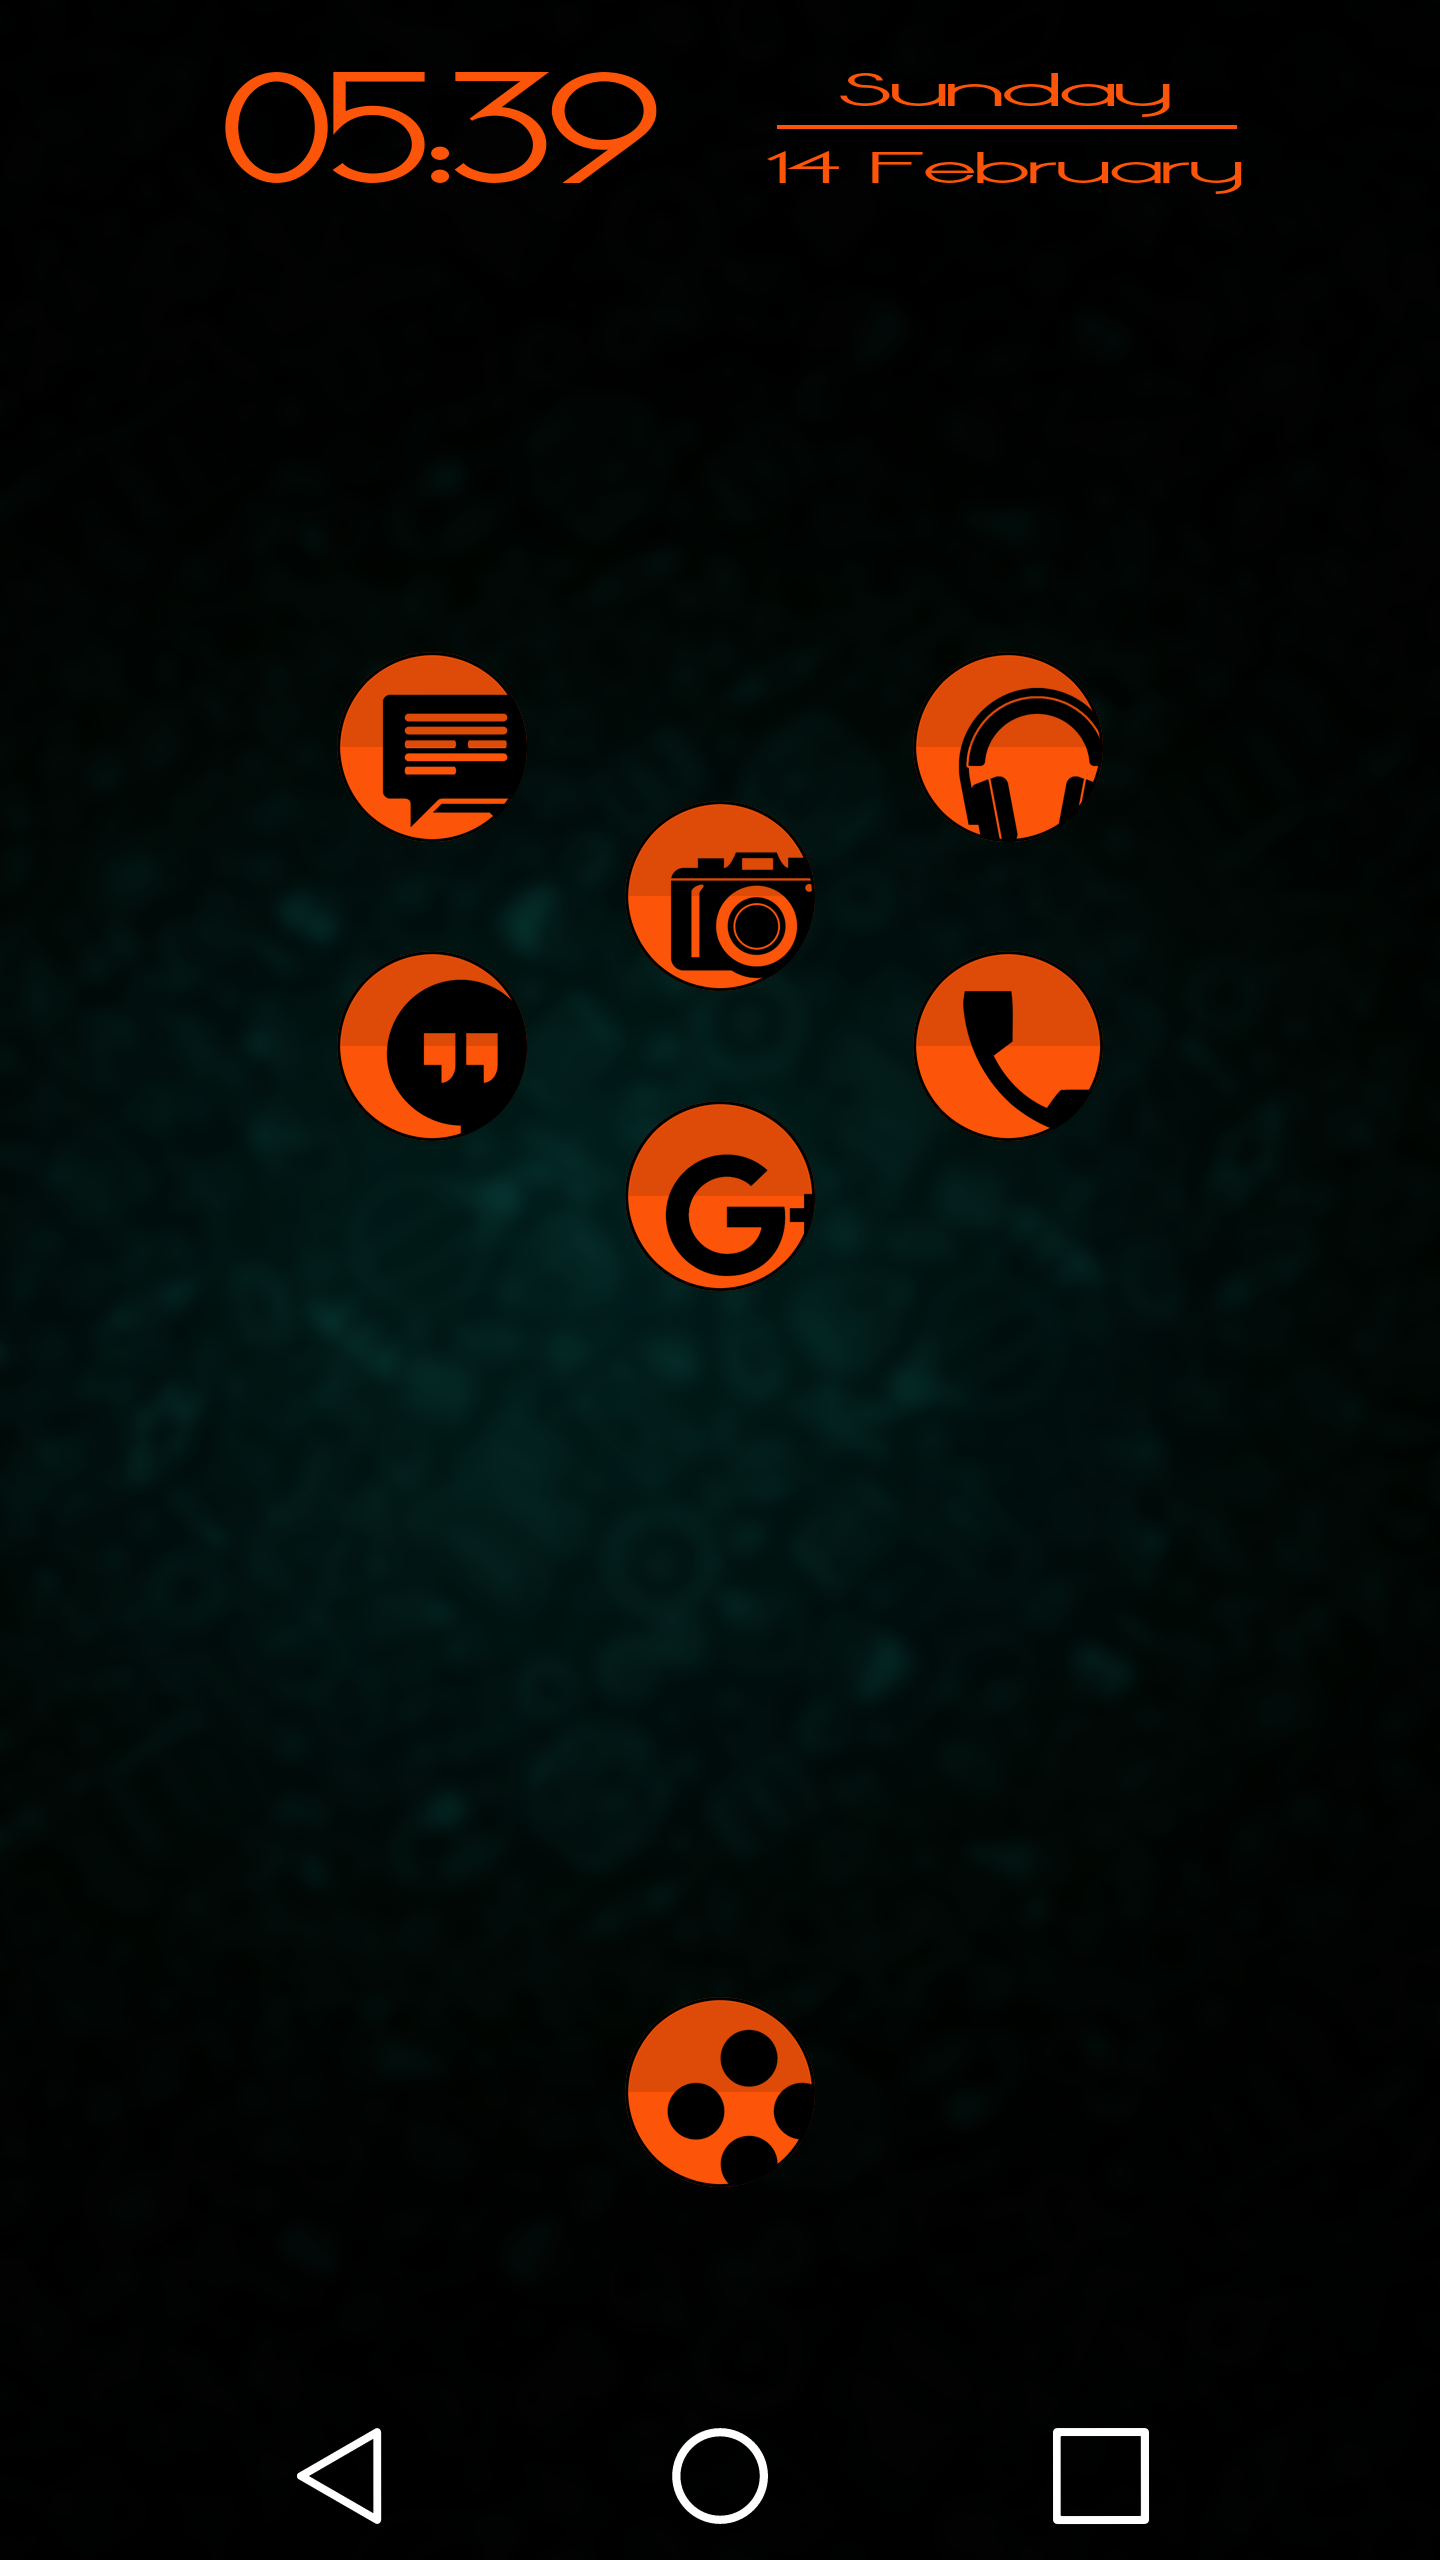 Android application Simp 164 Orange - Icon Pack screenshort